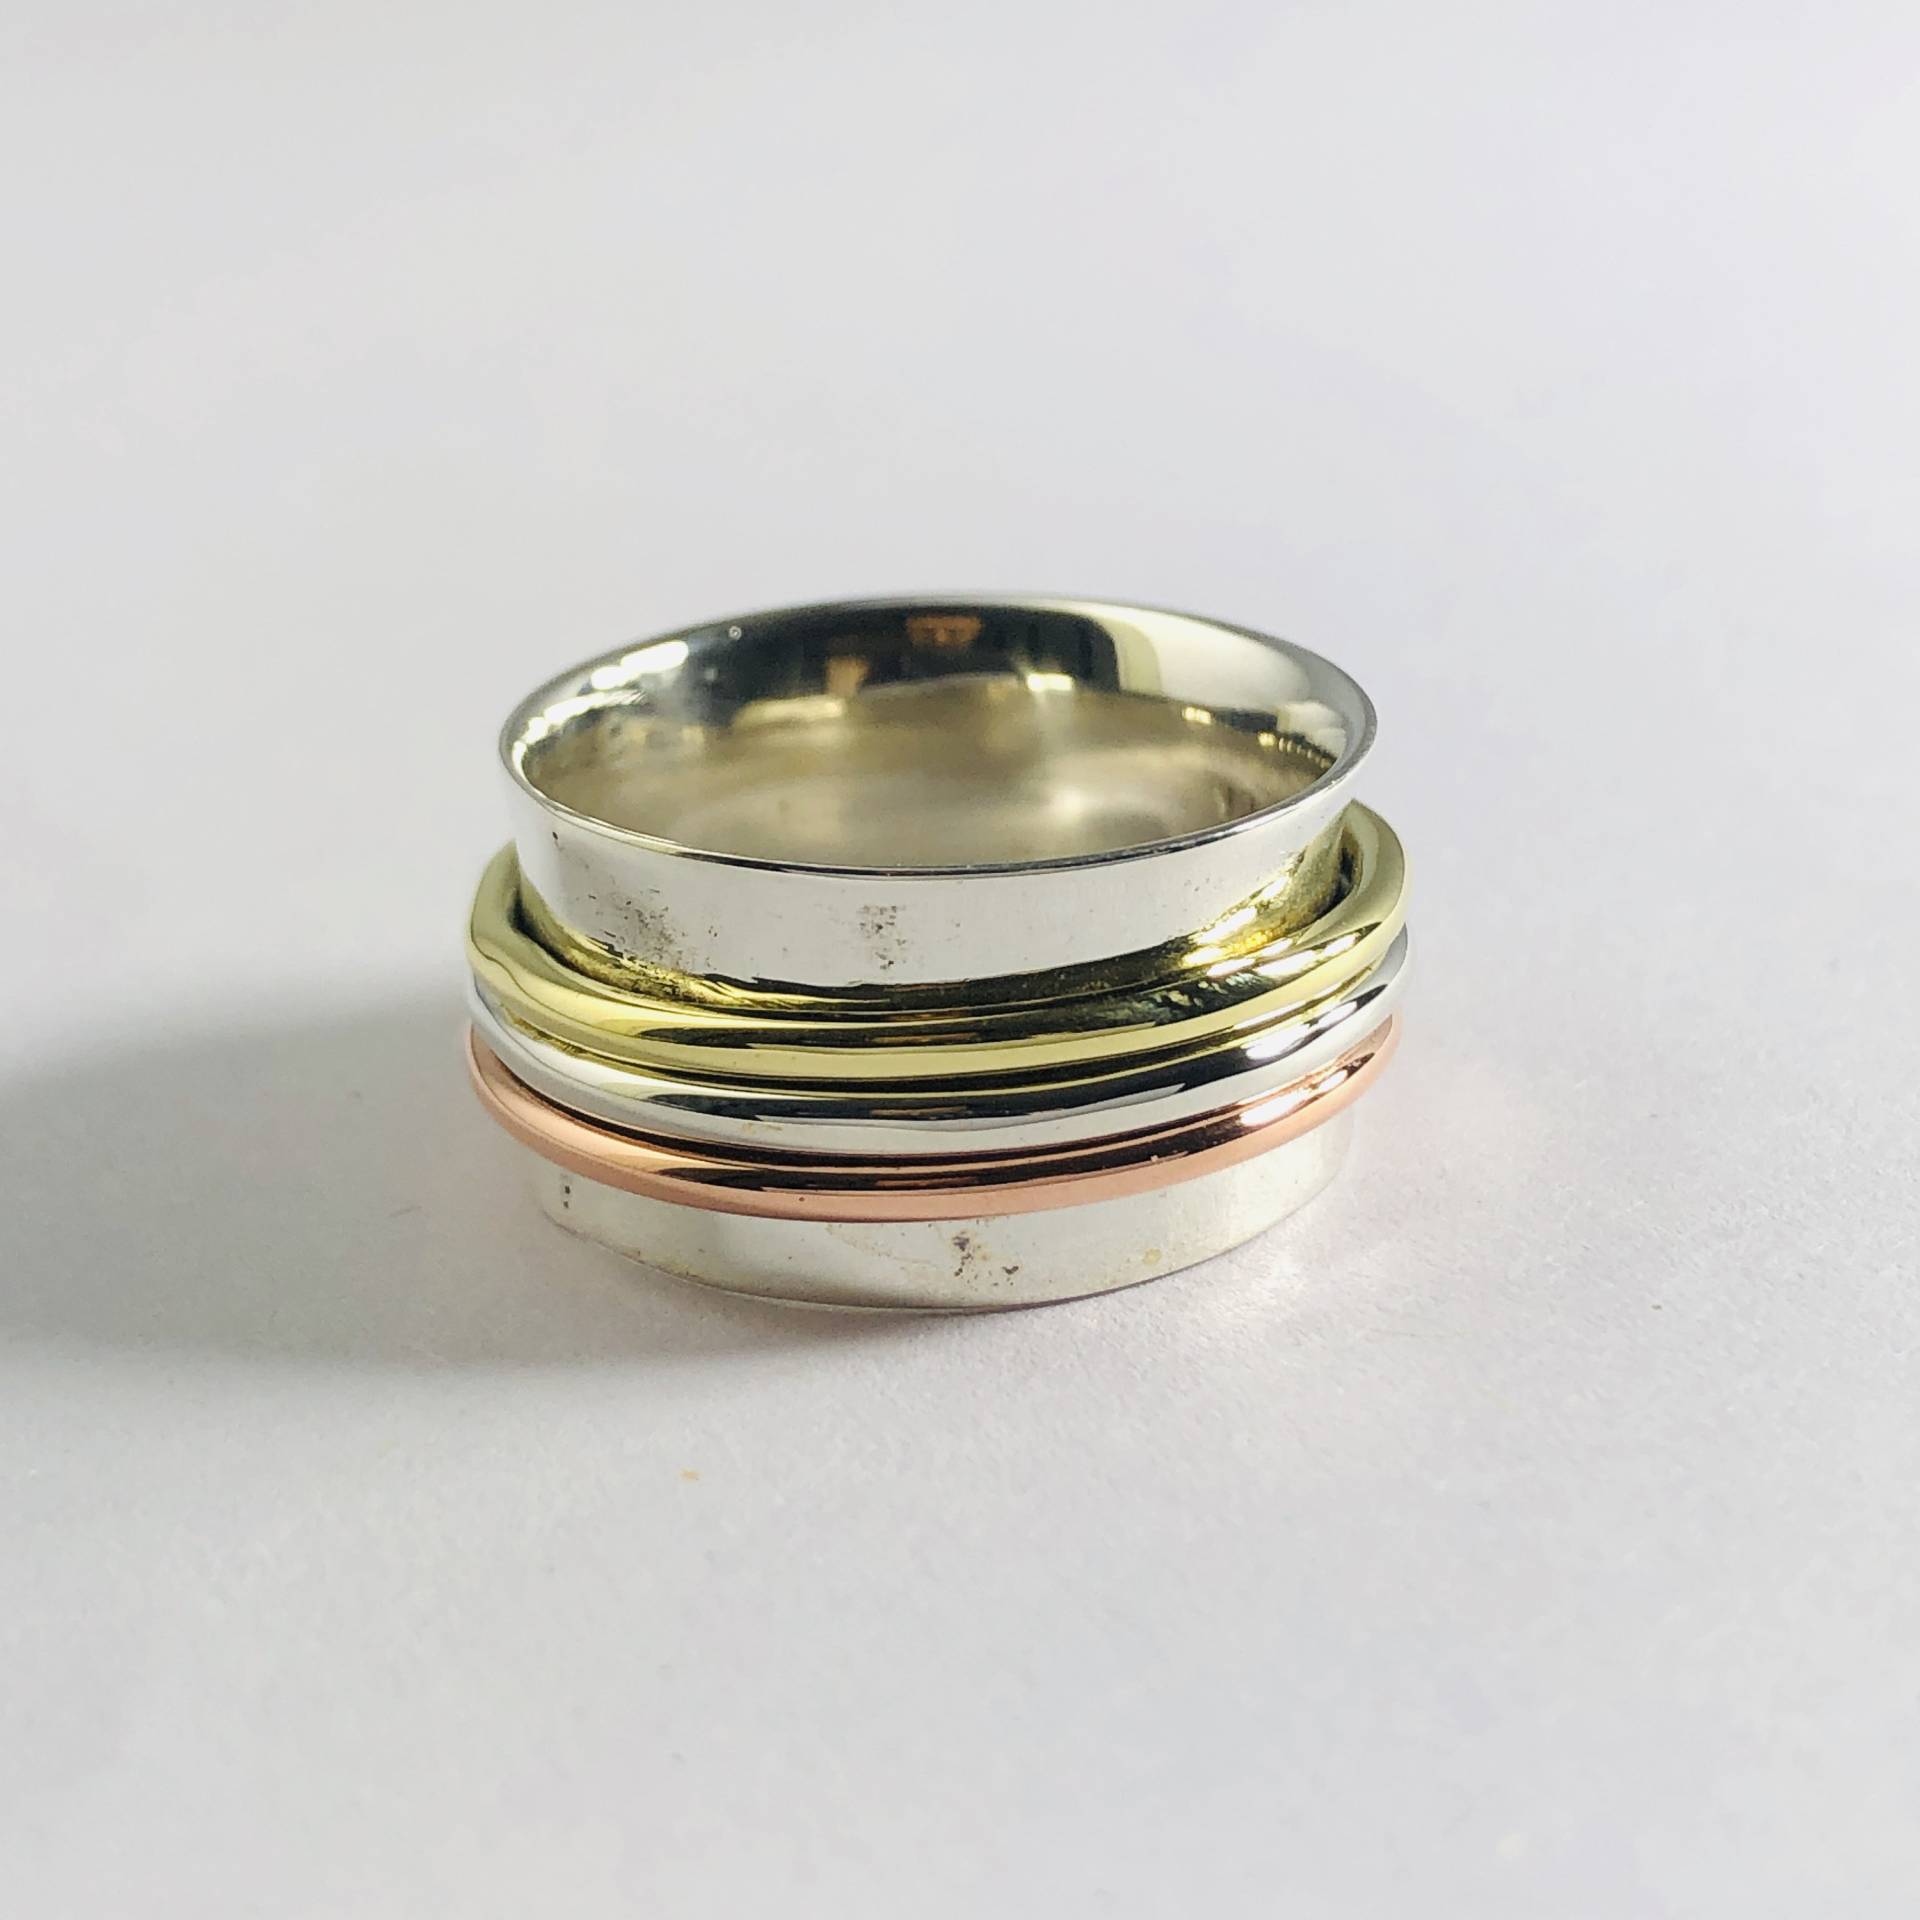 Trending Spinner Ring 925 Sterling Silber-Multi Spin Ring-Zappeln Ring-Handgemachter Ring-Angst Ring-Daumen Ring-Ring Für Geschenk-Stress Relief von Moonstoneringstore